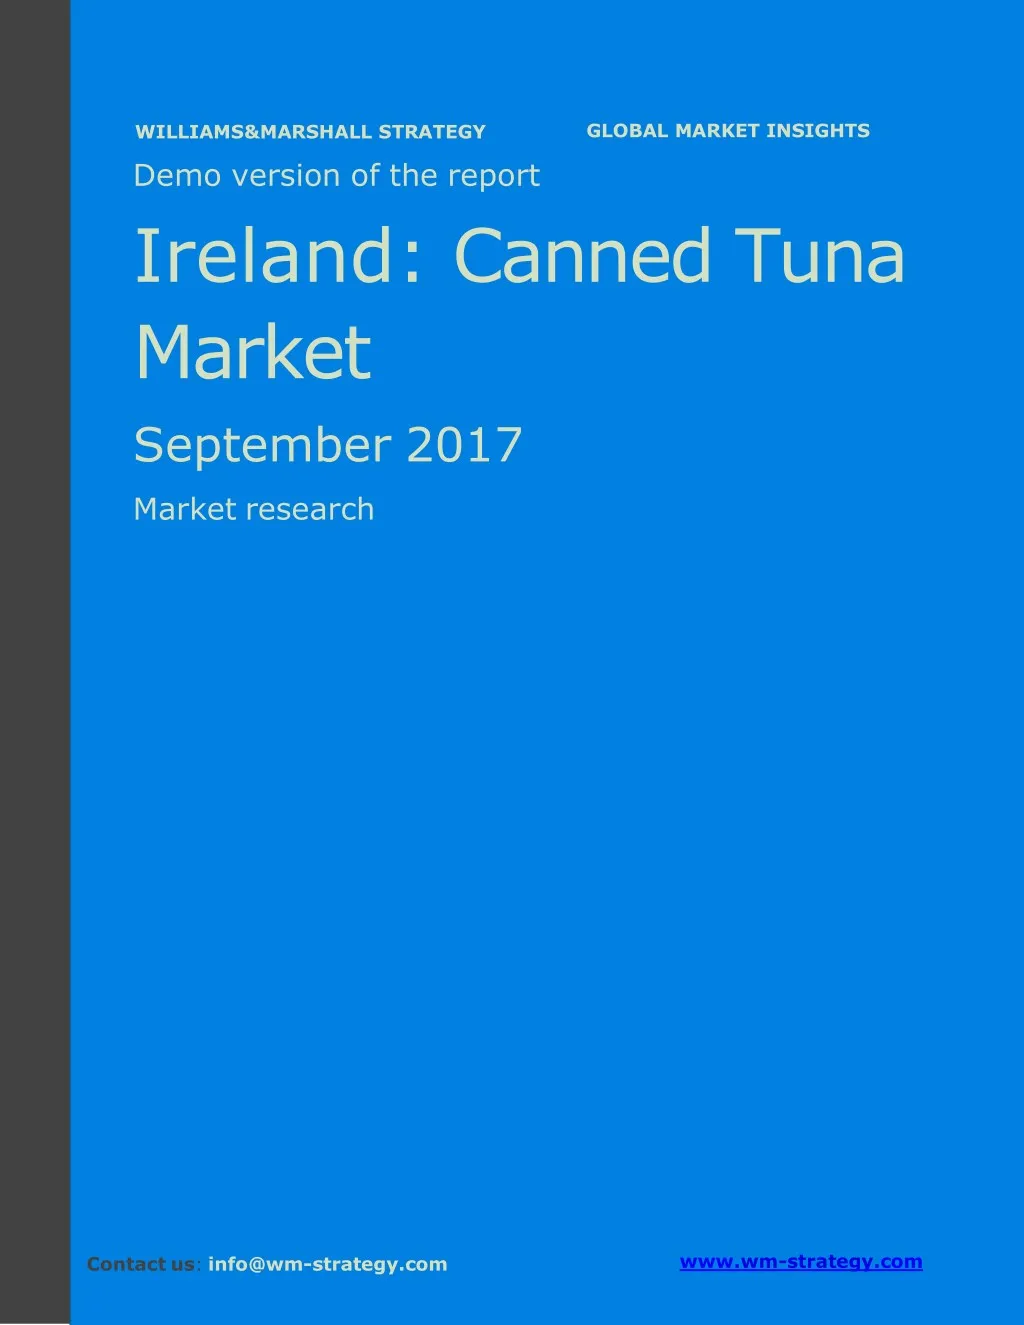 demo version ireland canned tuna market september